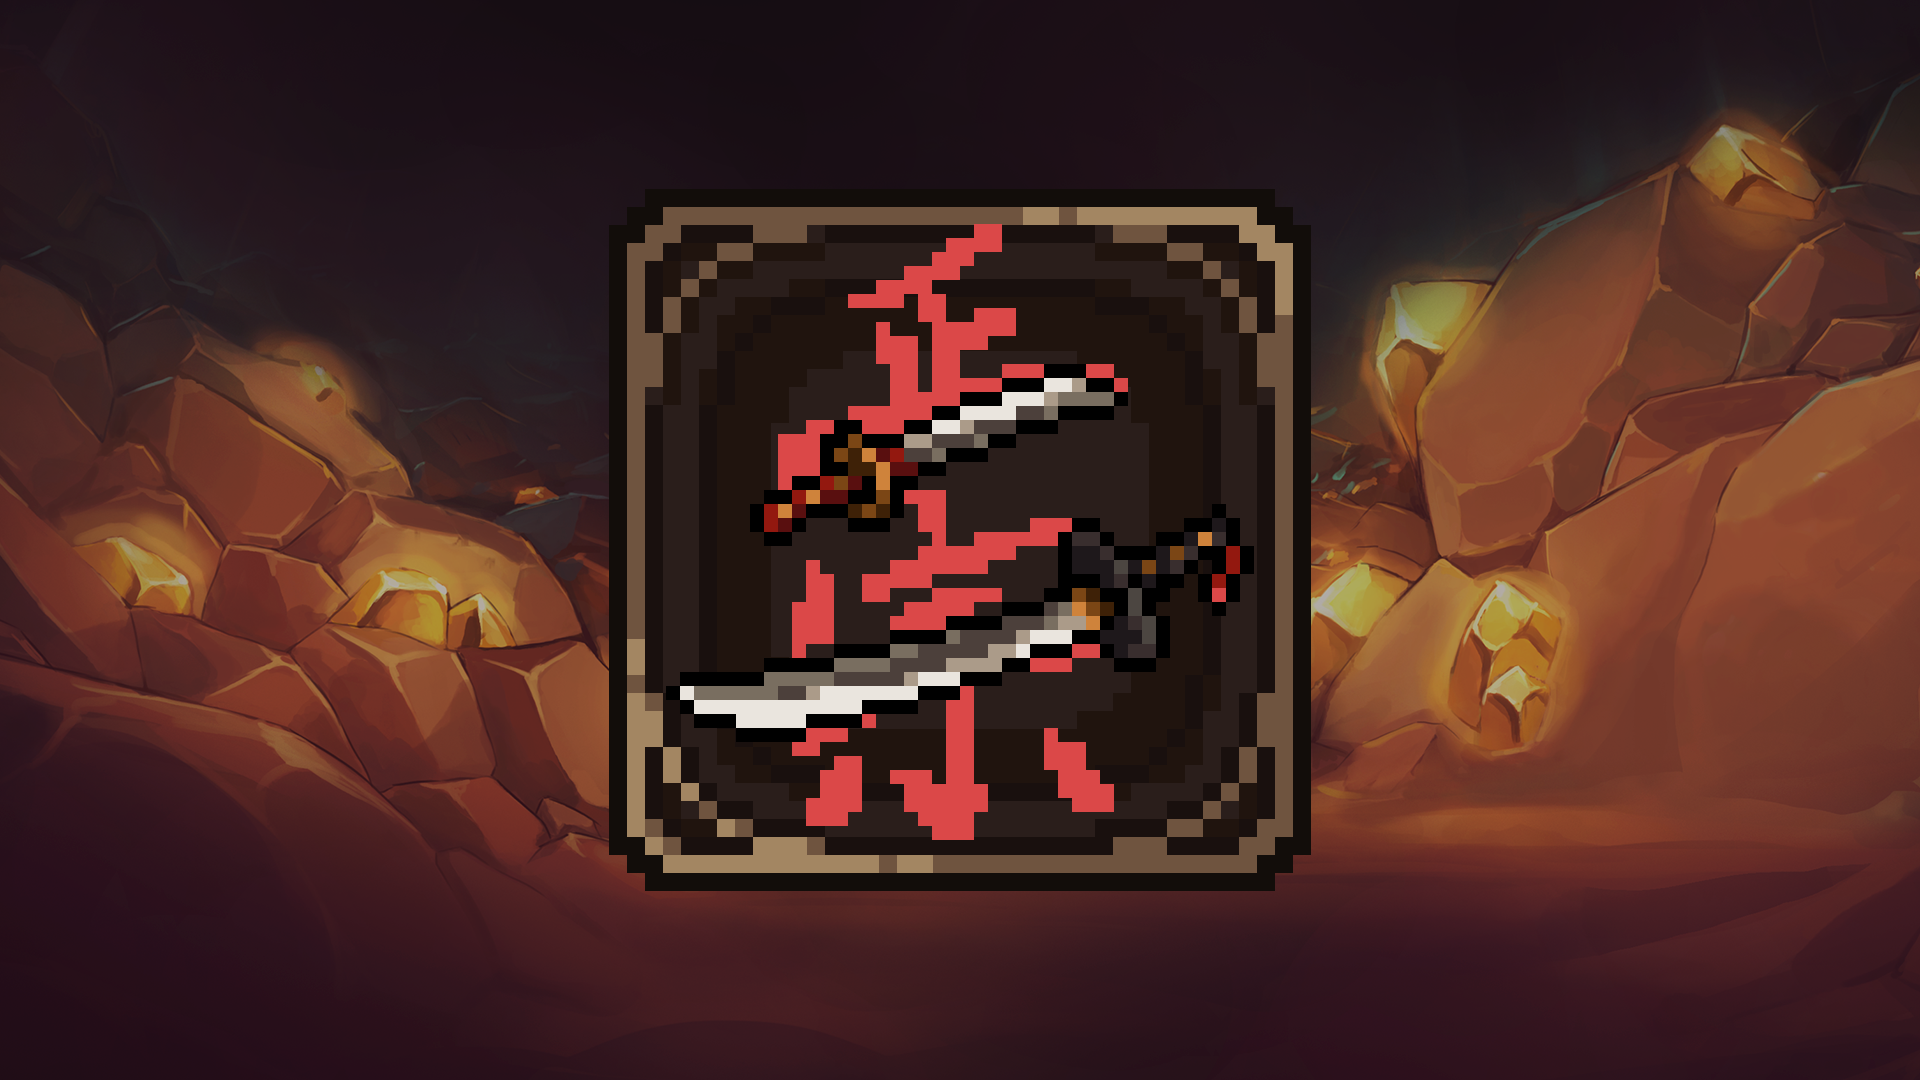 Icon for Master Swordsman